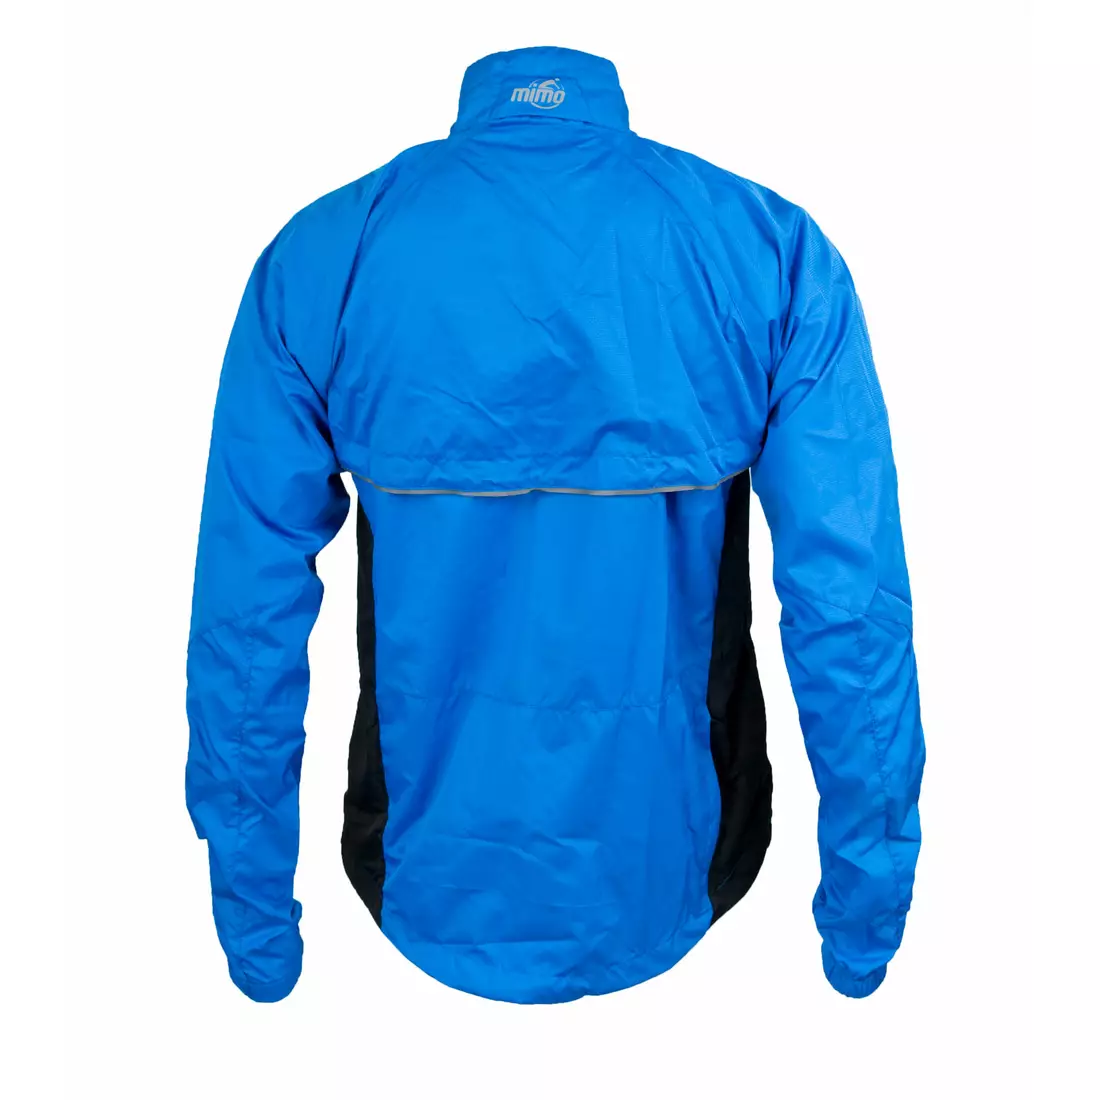 MikeSPORT SWORD - cyklistická bunda, odepínací rukávy, barva: Černá a modrá